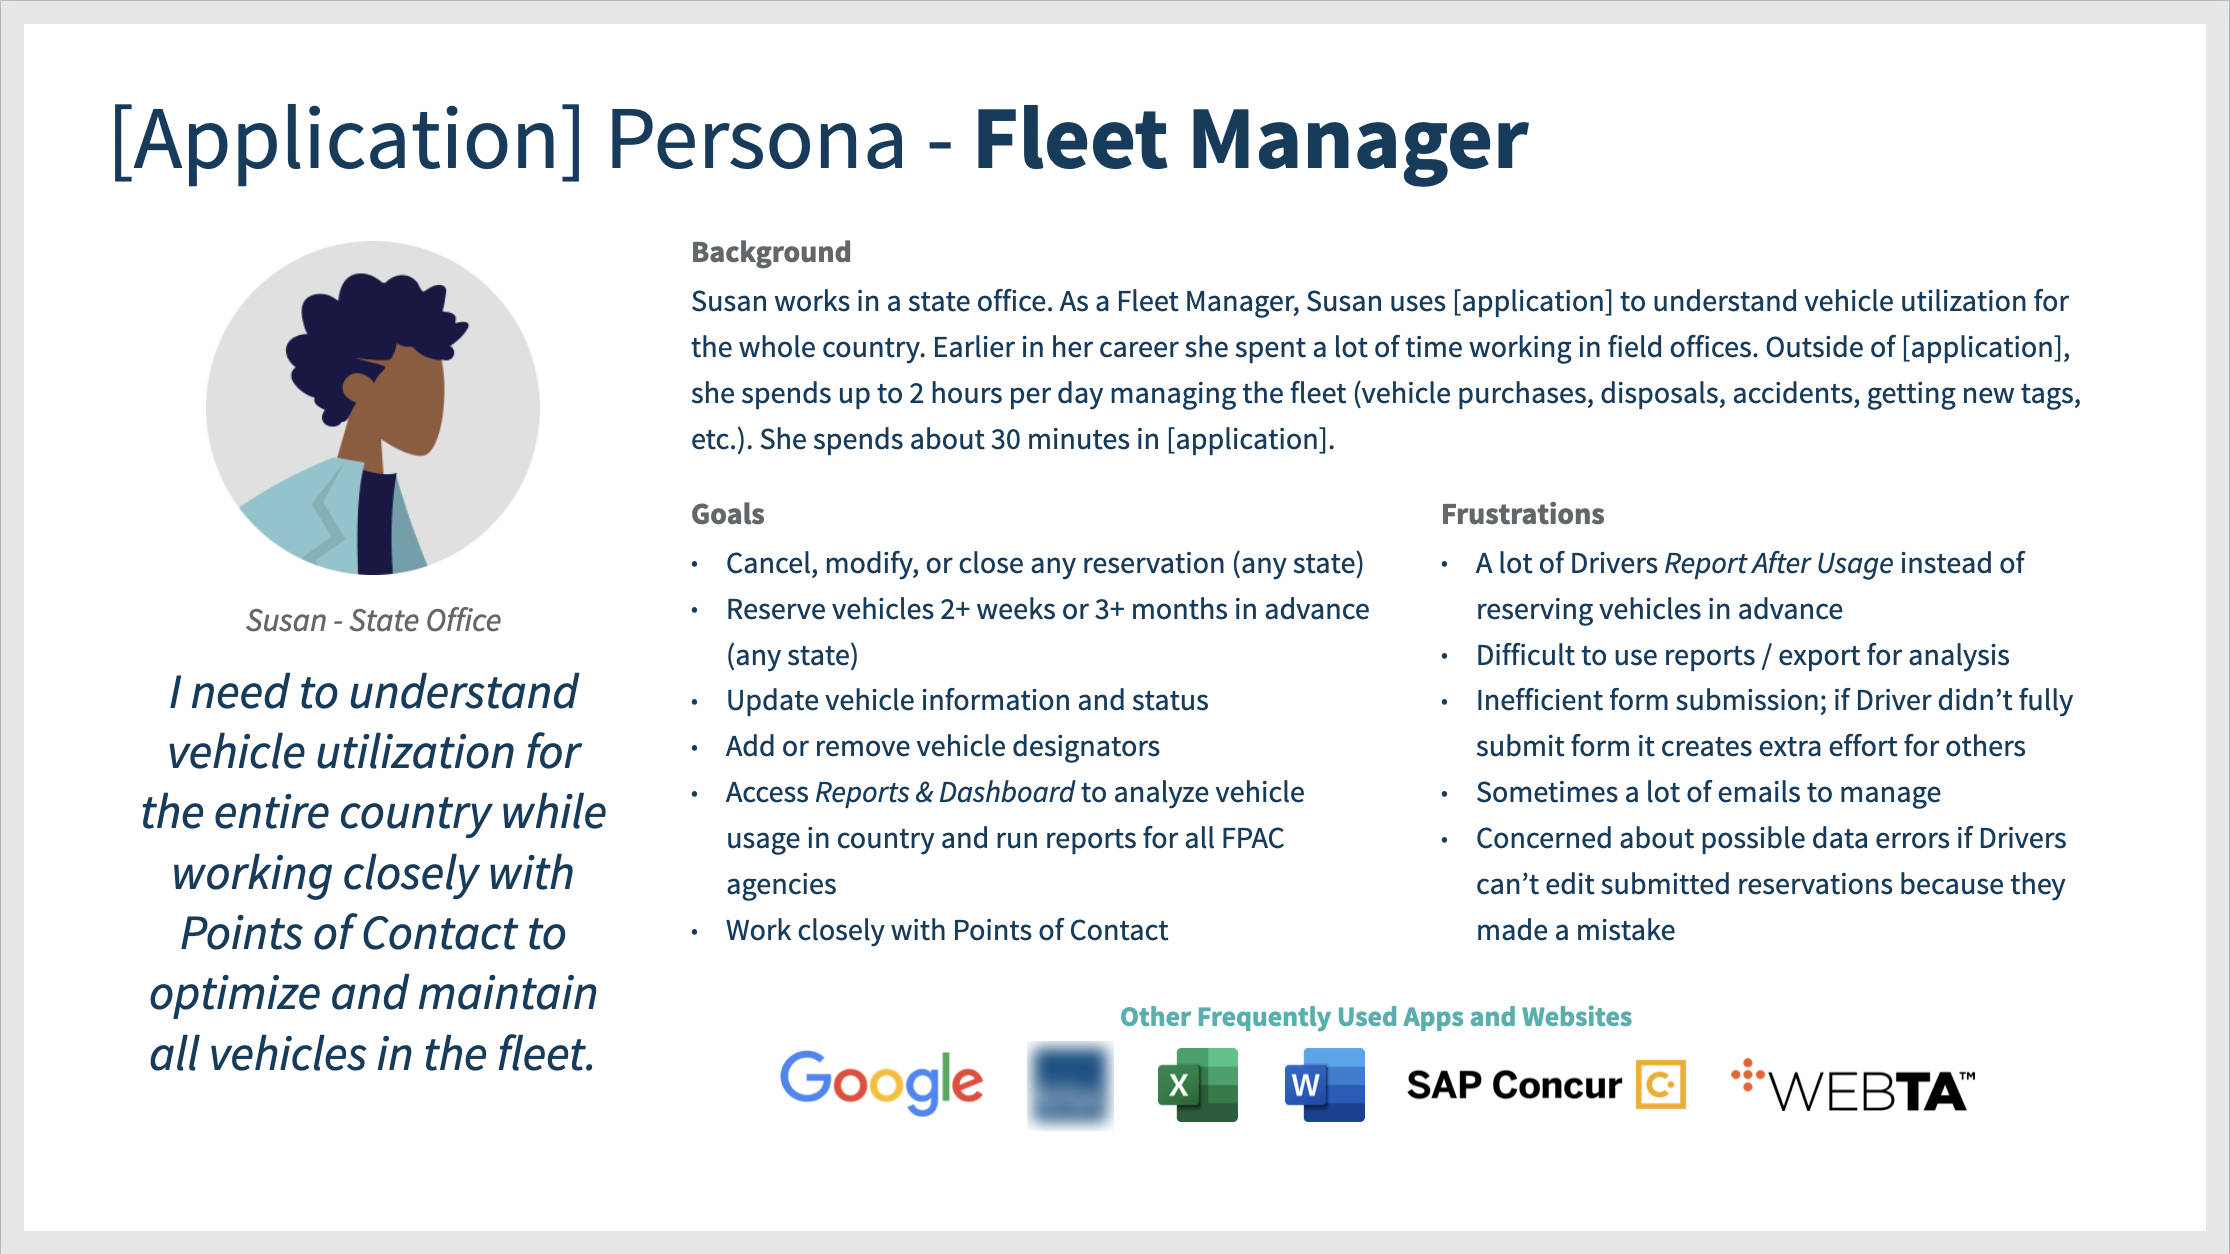 Persona: Fleet Manager